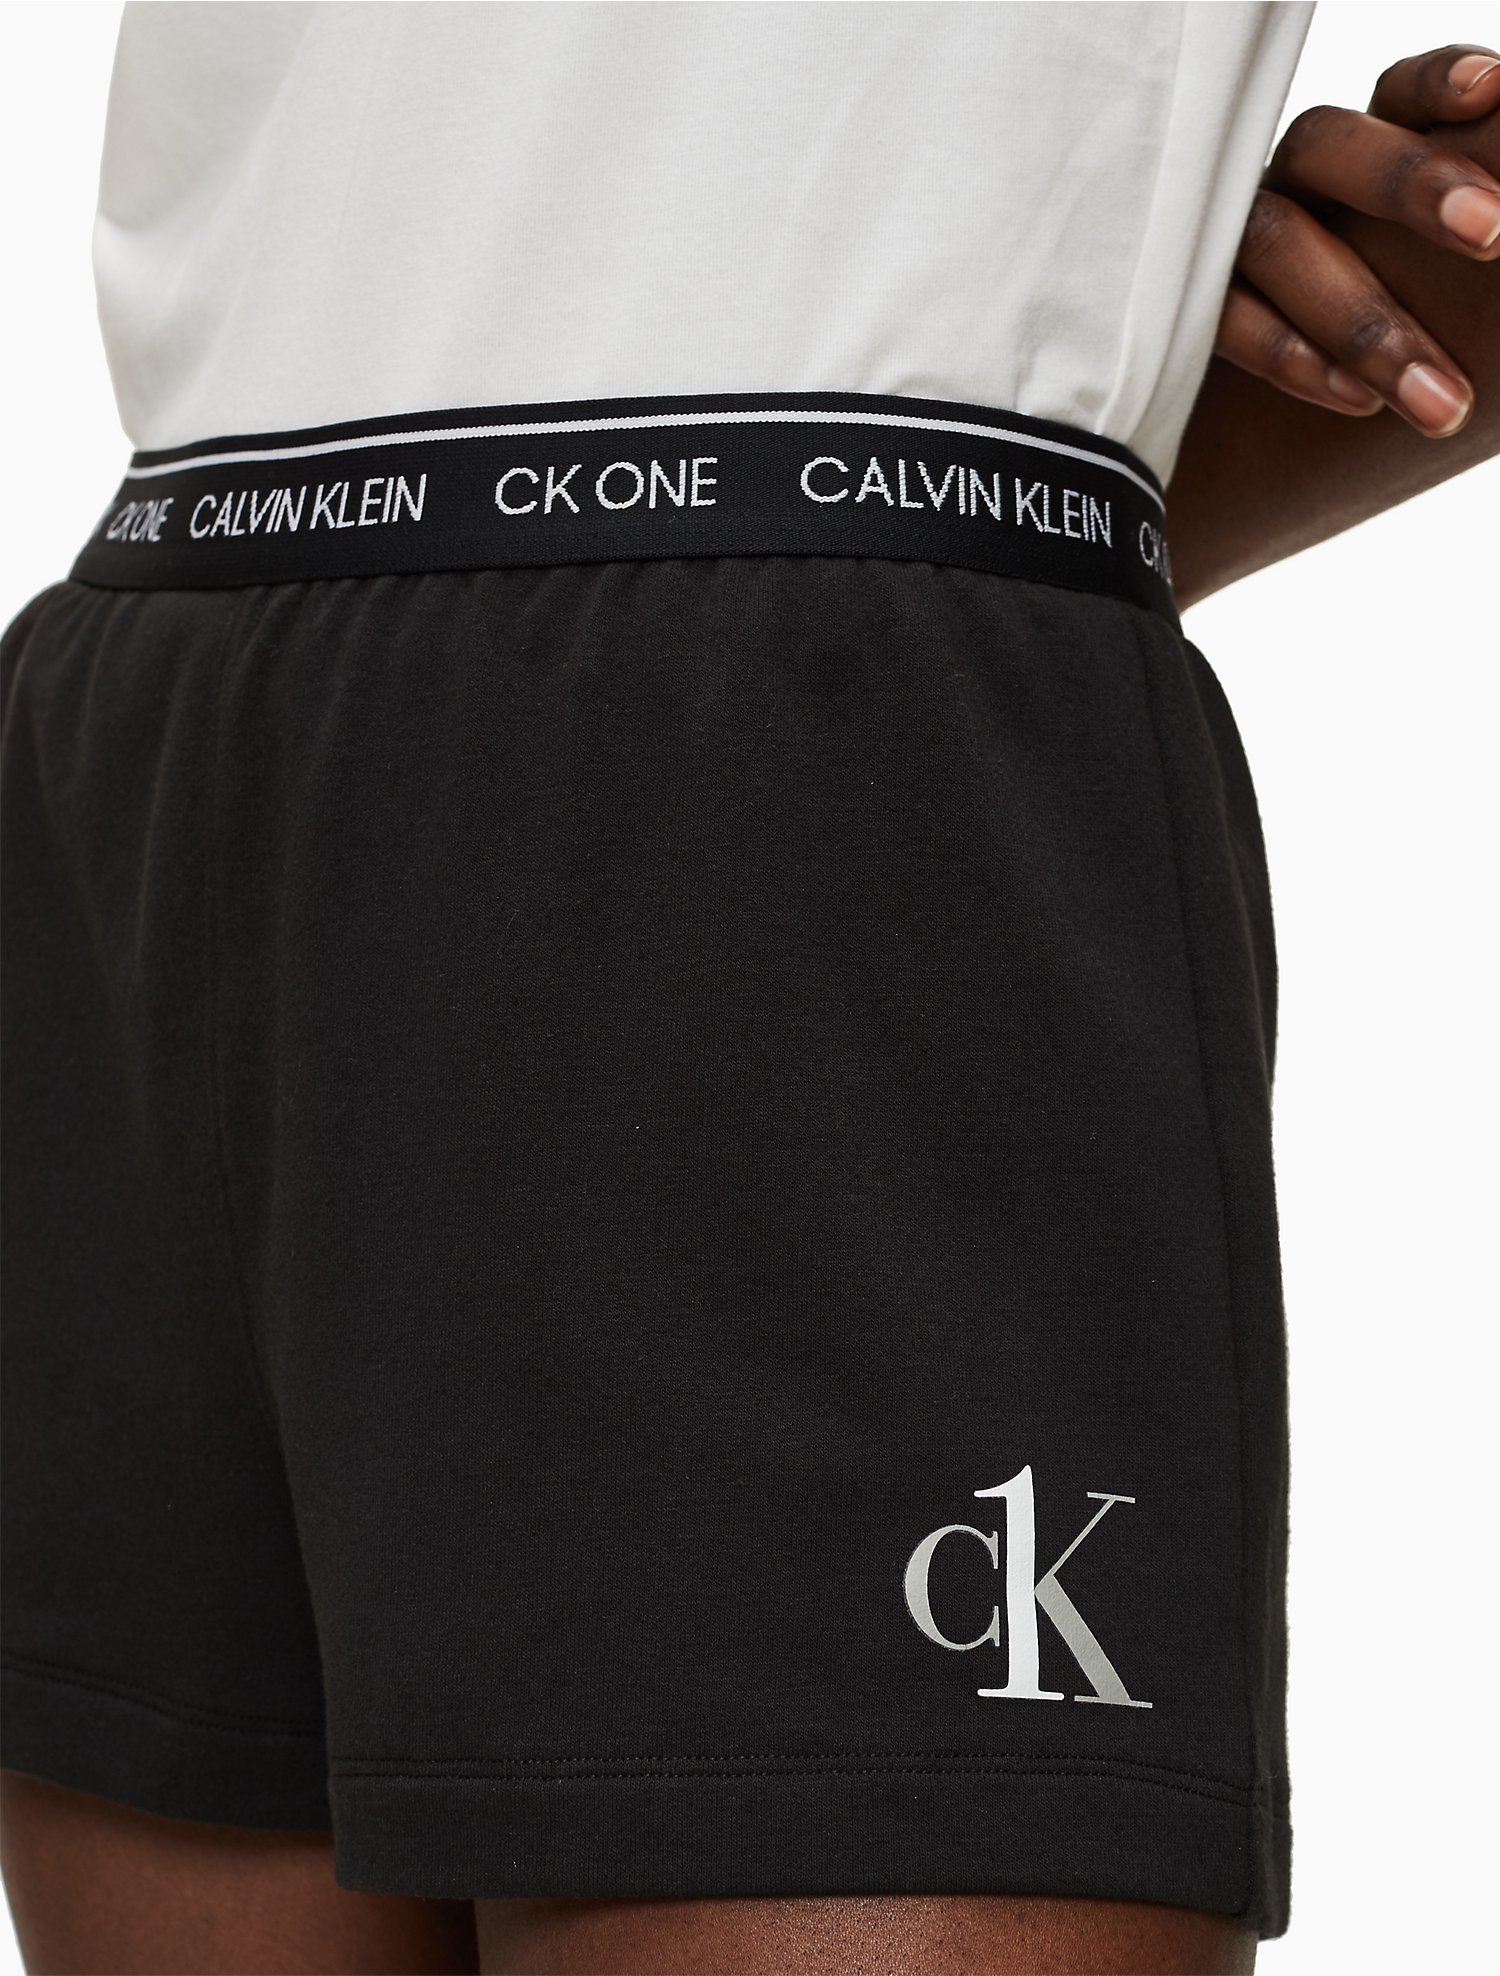 CK ONE Sleep Shorts | Calvin USA